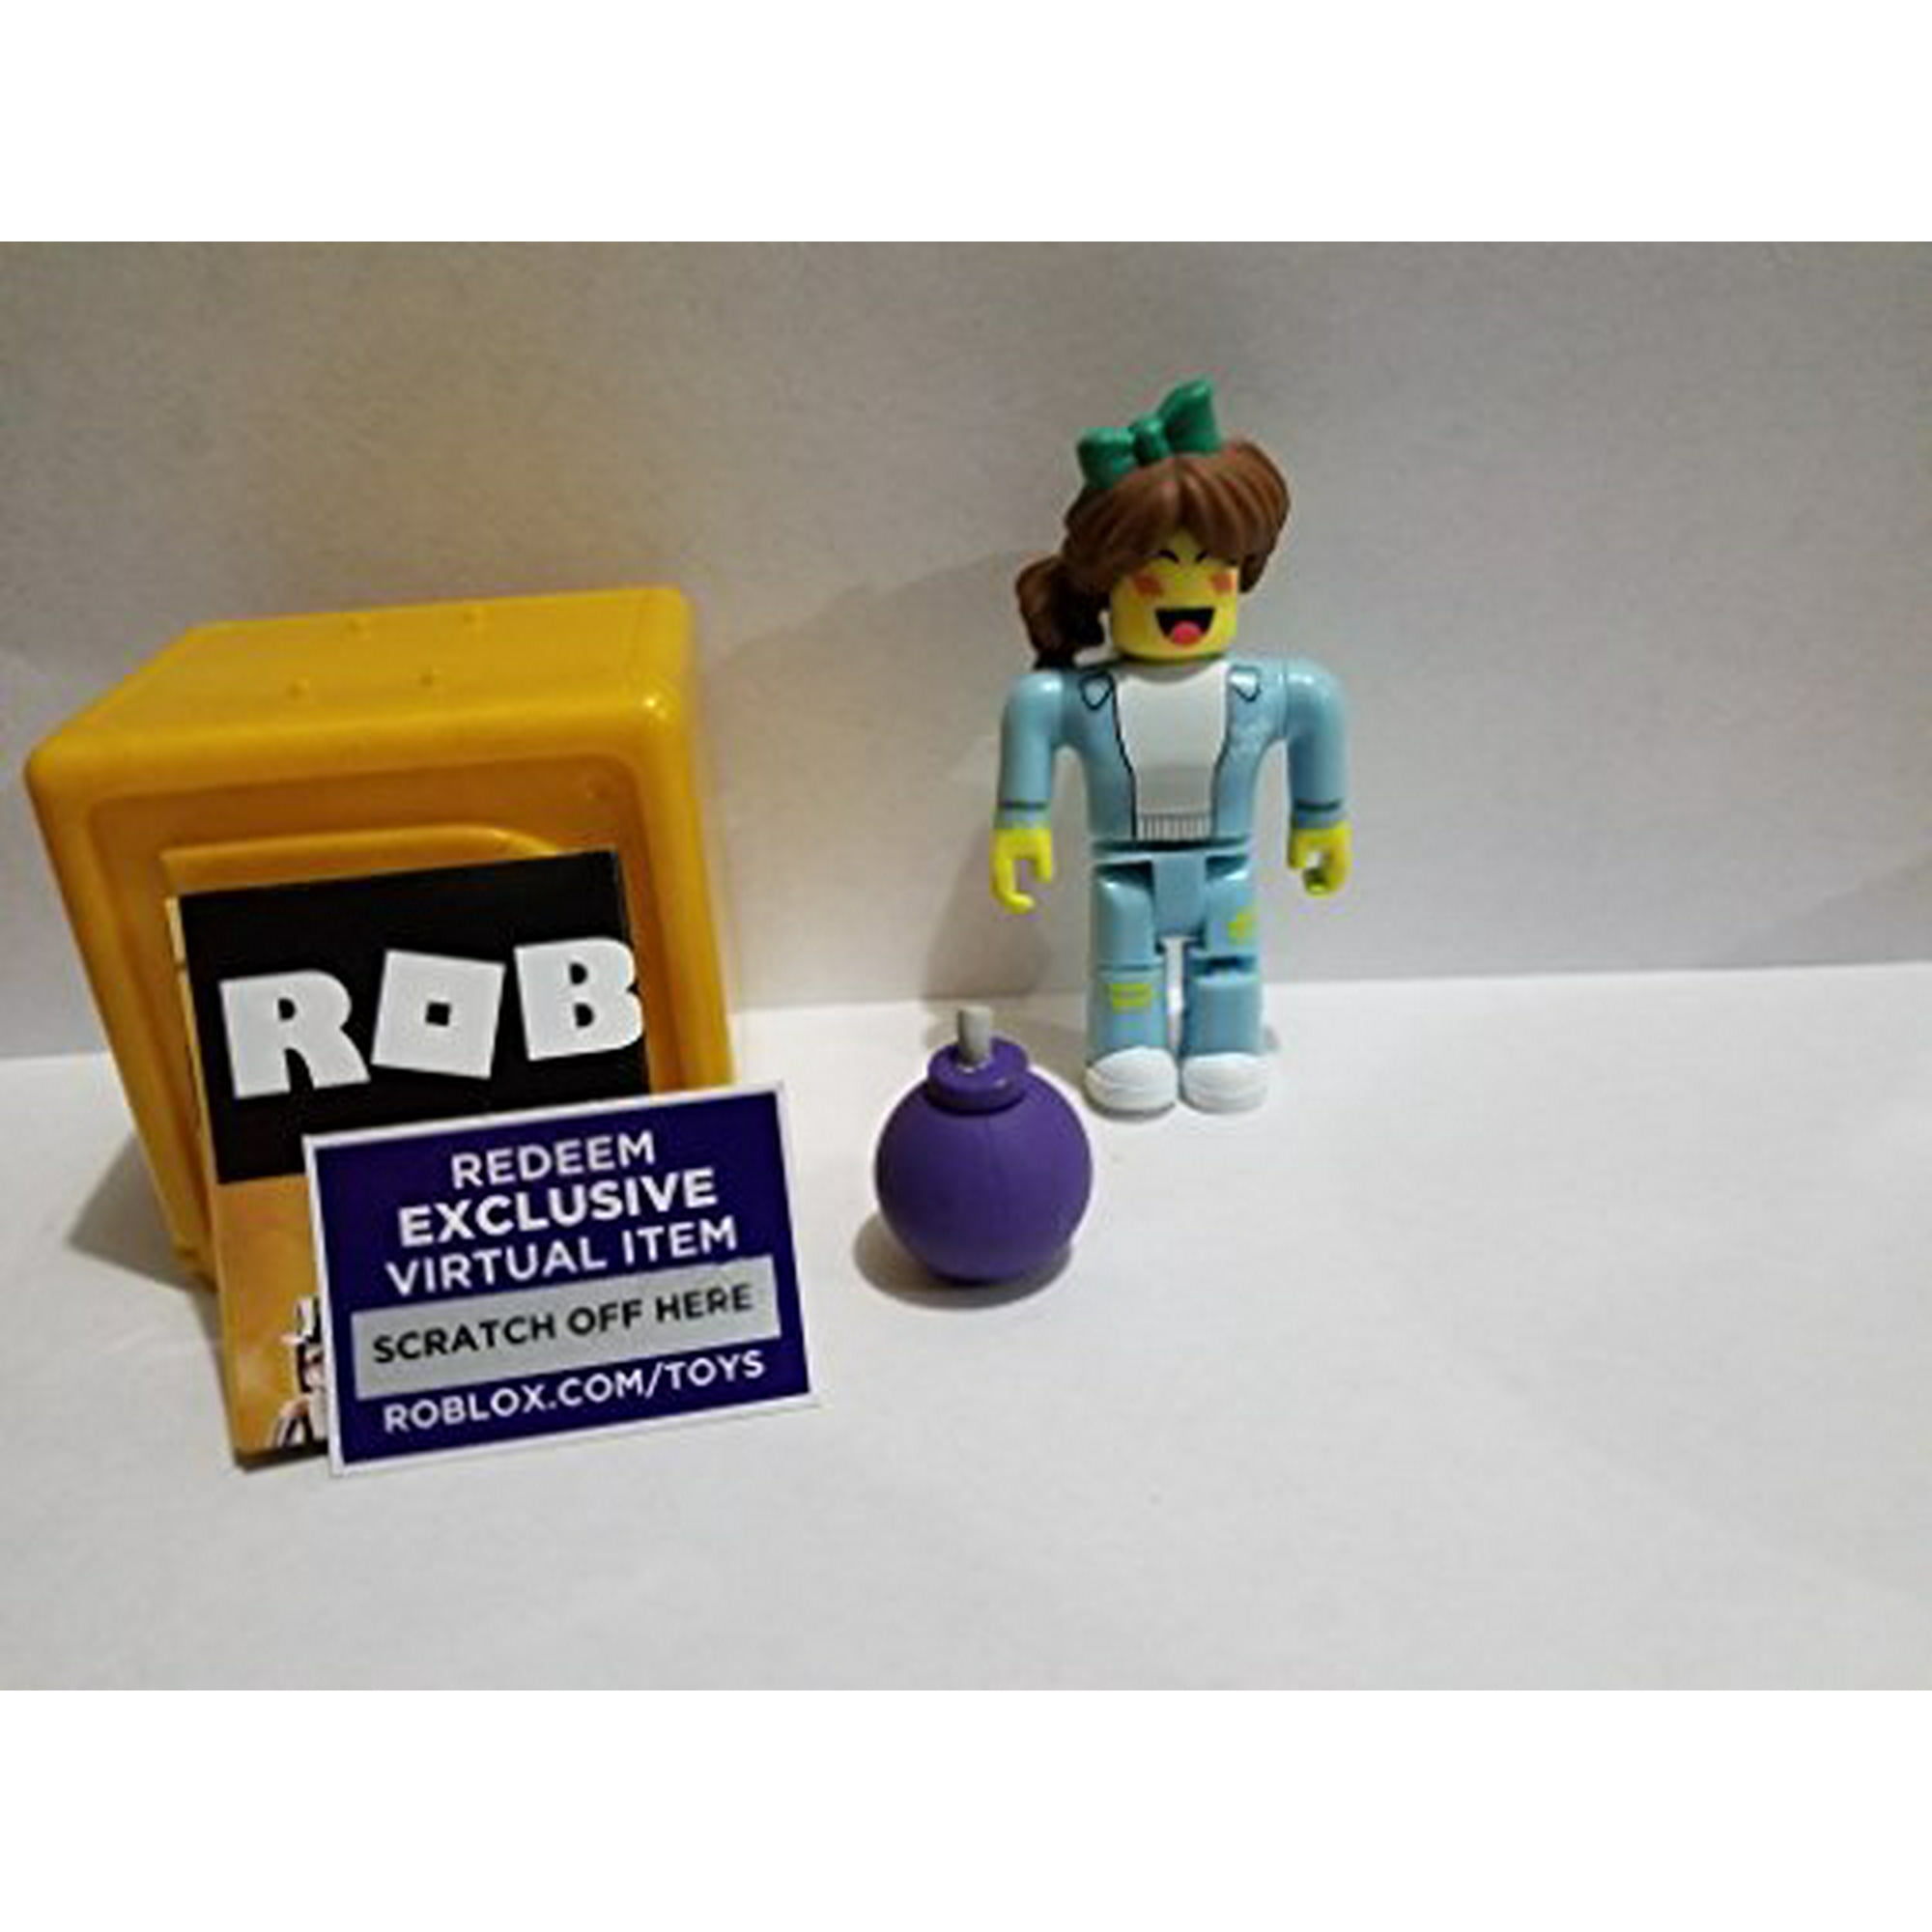 Roblox Gold Celebrity Series Super Bomb Survival Shopgirl Action Figure Mystery Box Virtual Item Code 2 5 Walmart Canada - roblox celebrity collection mini mystery figures gold box